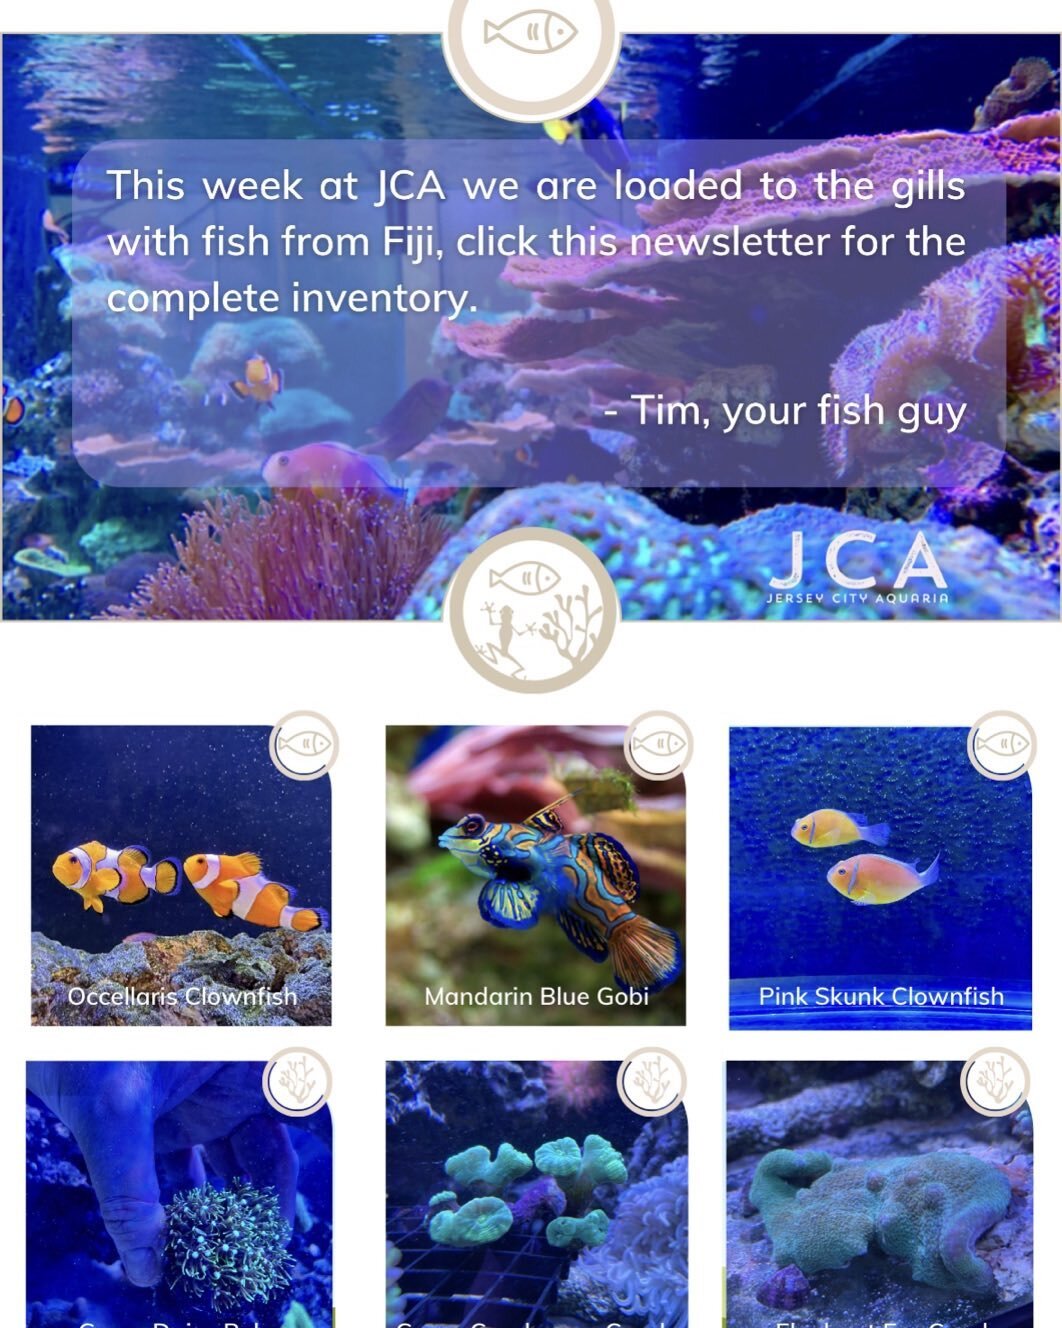 Full to the gills from Fiji! Check out our latest inventory- &mdash;&mdash;-
#aquarium #fish #fishtank #reef #reeftank #coral #saltwater #custom #freshwater #NYCMetro #NJ #TropicMarinTanks #ecotechmarine #eshopps #aquaUV 
&mdash;&mdash;-
Let us help 